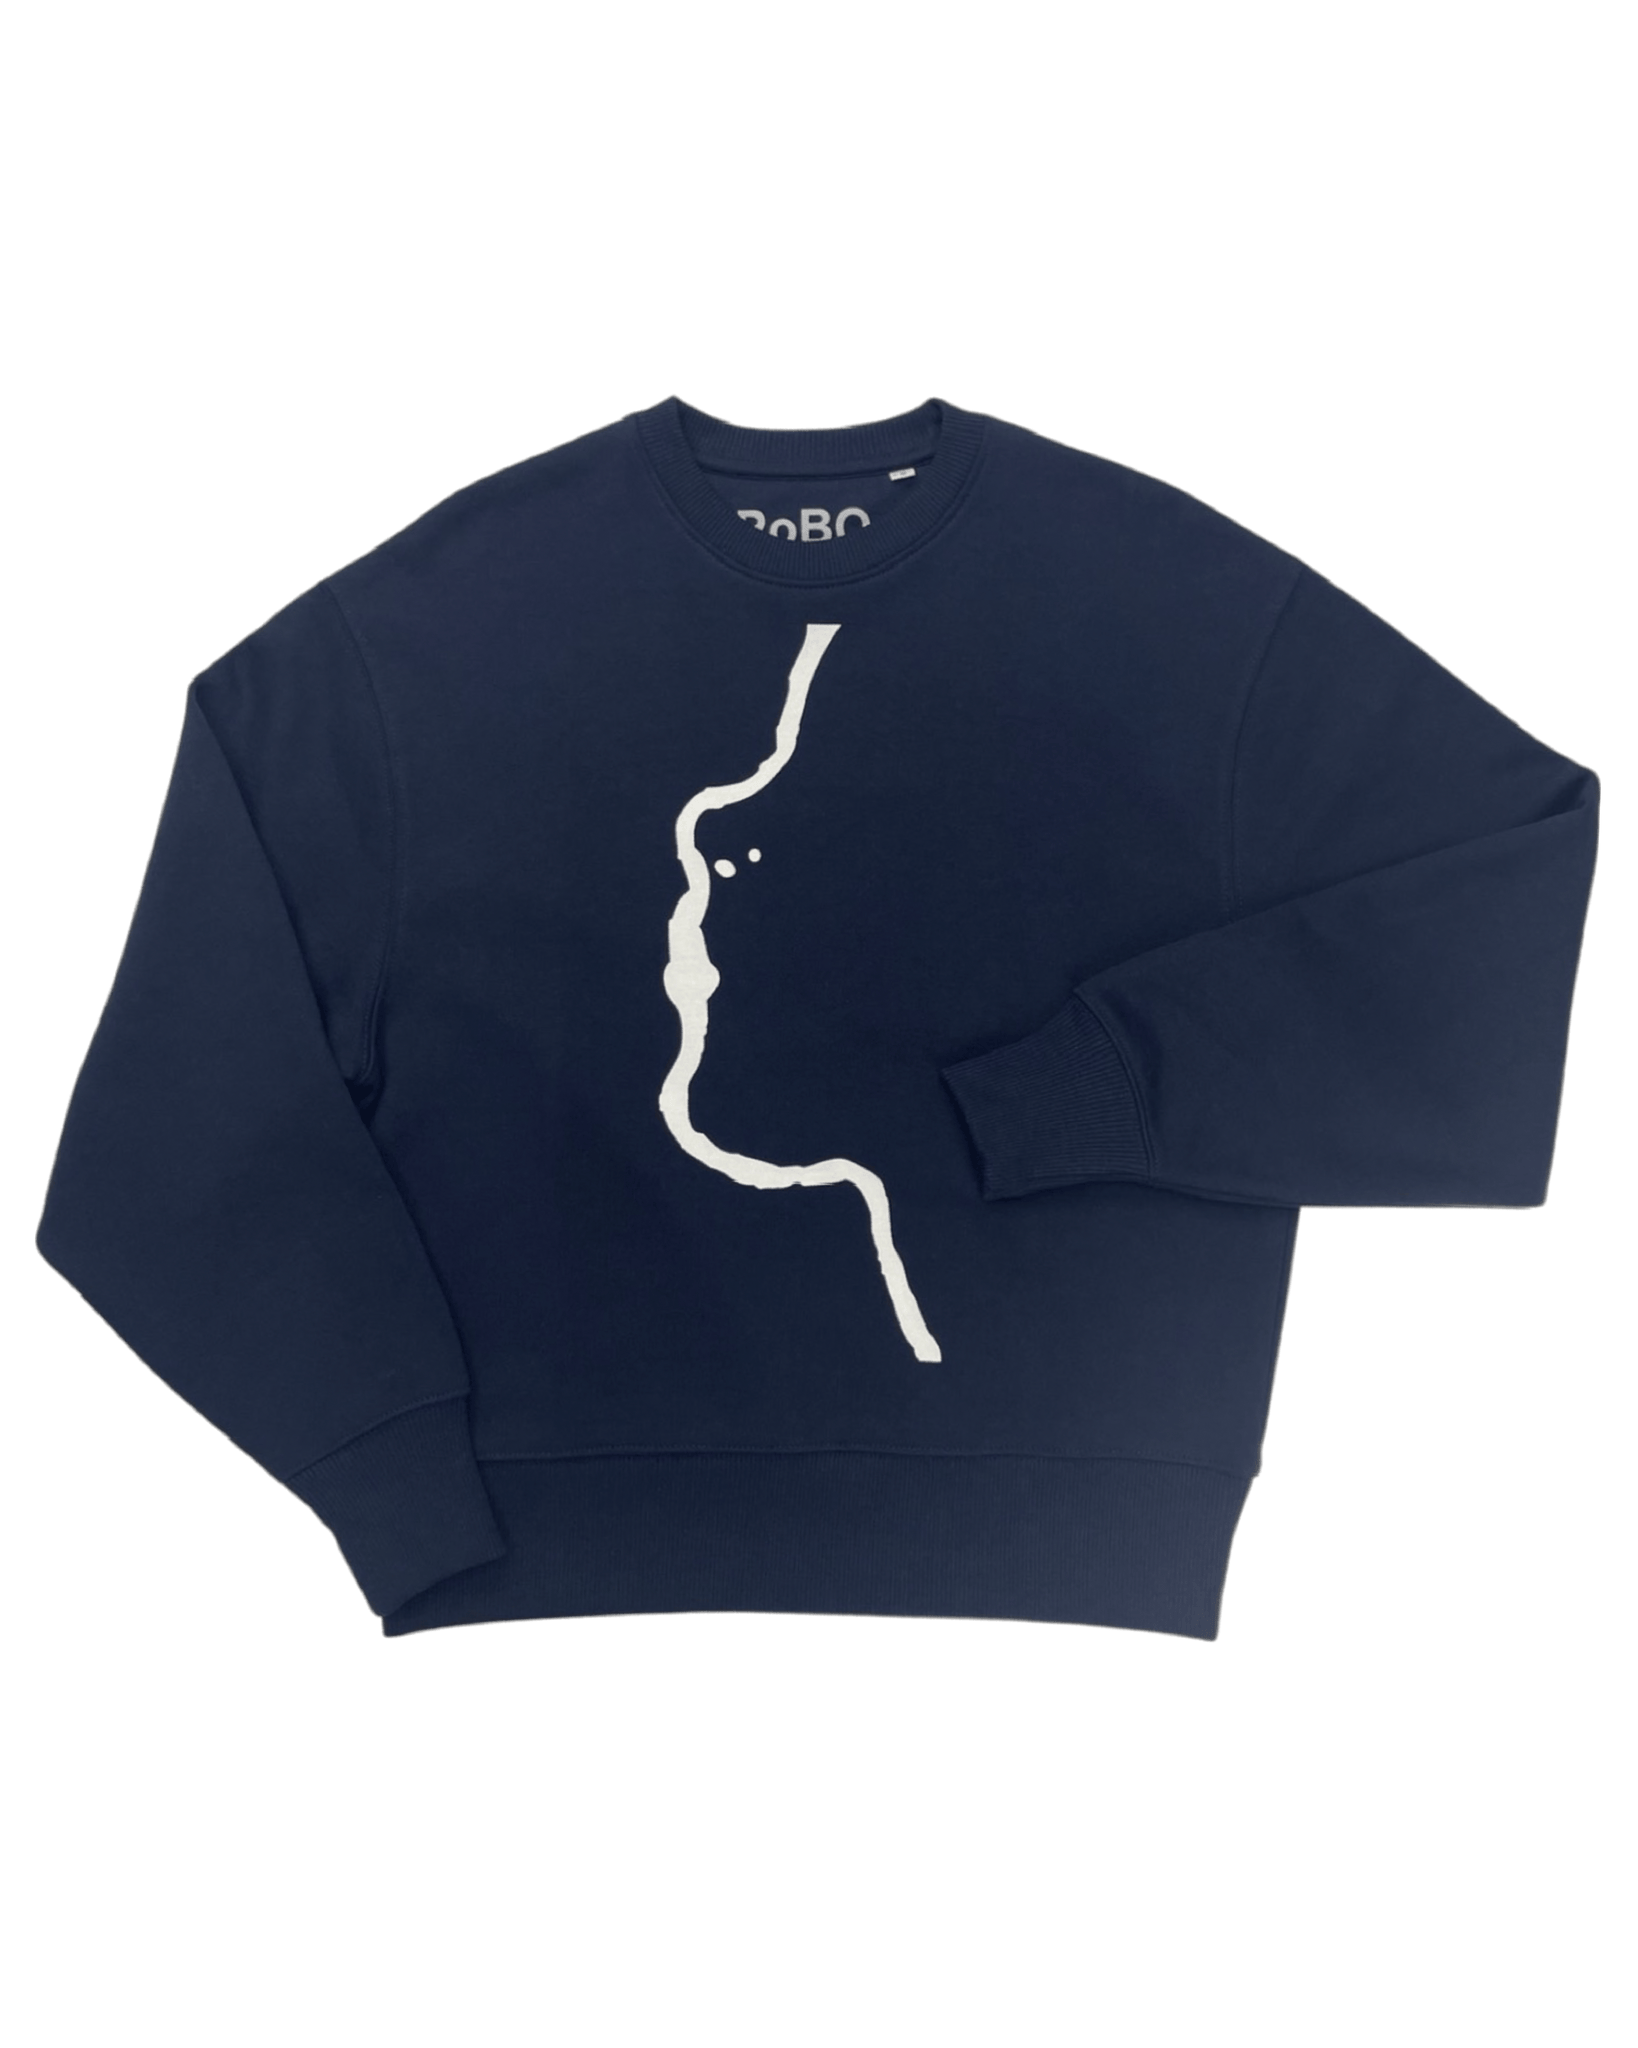 Organic Cotton Sweatshirt, Relaxed Fit - free shipping - PoBO